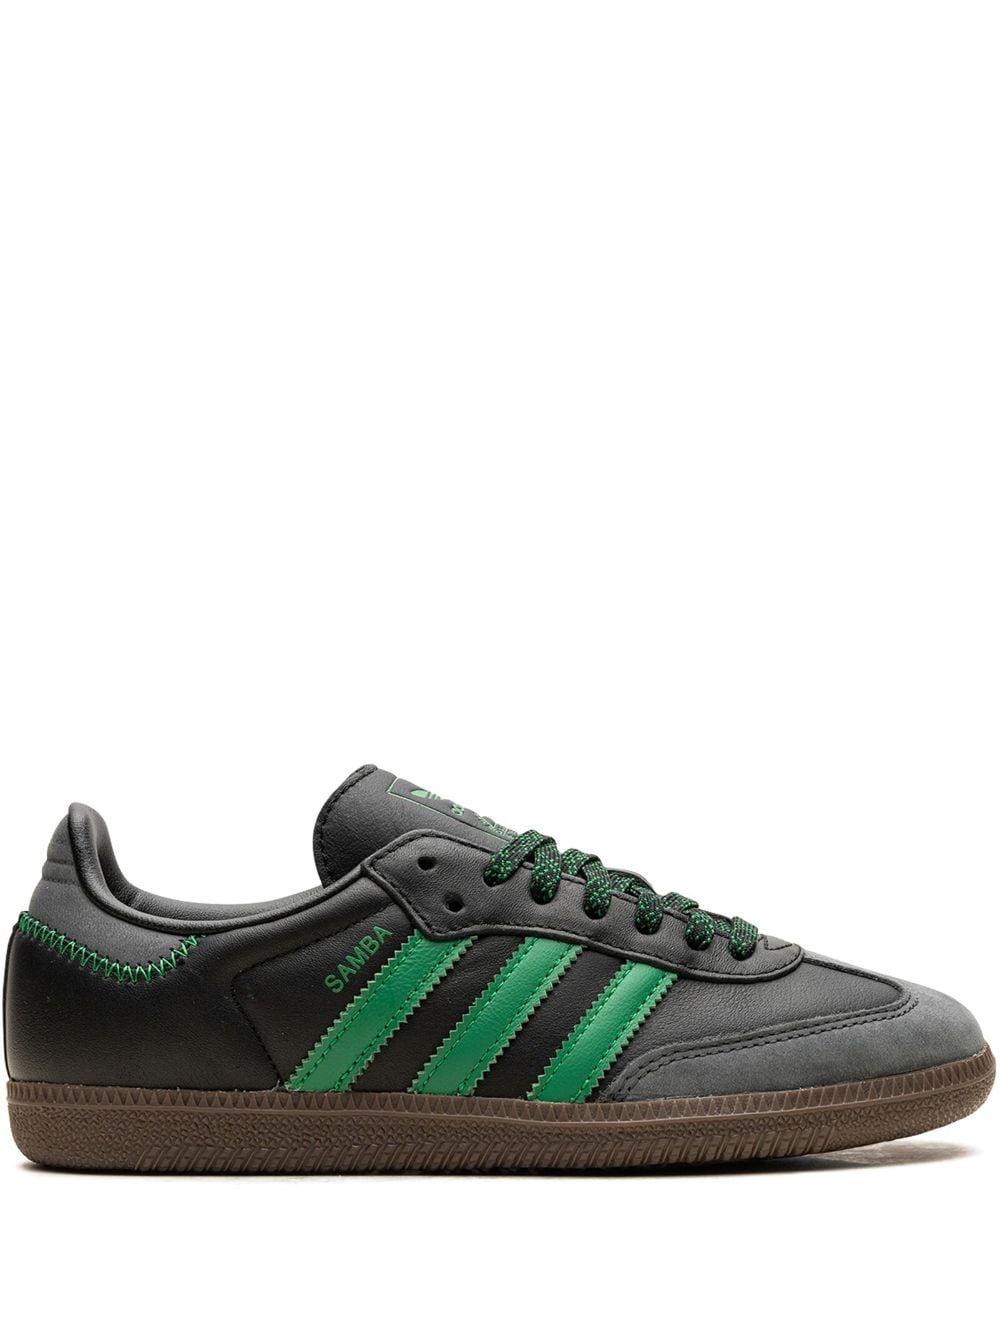 adidas Samba OG "Black Green" sneakers